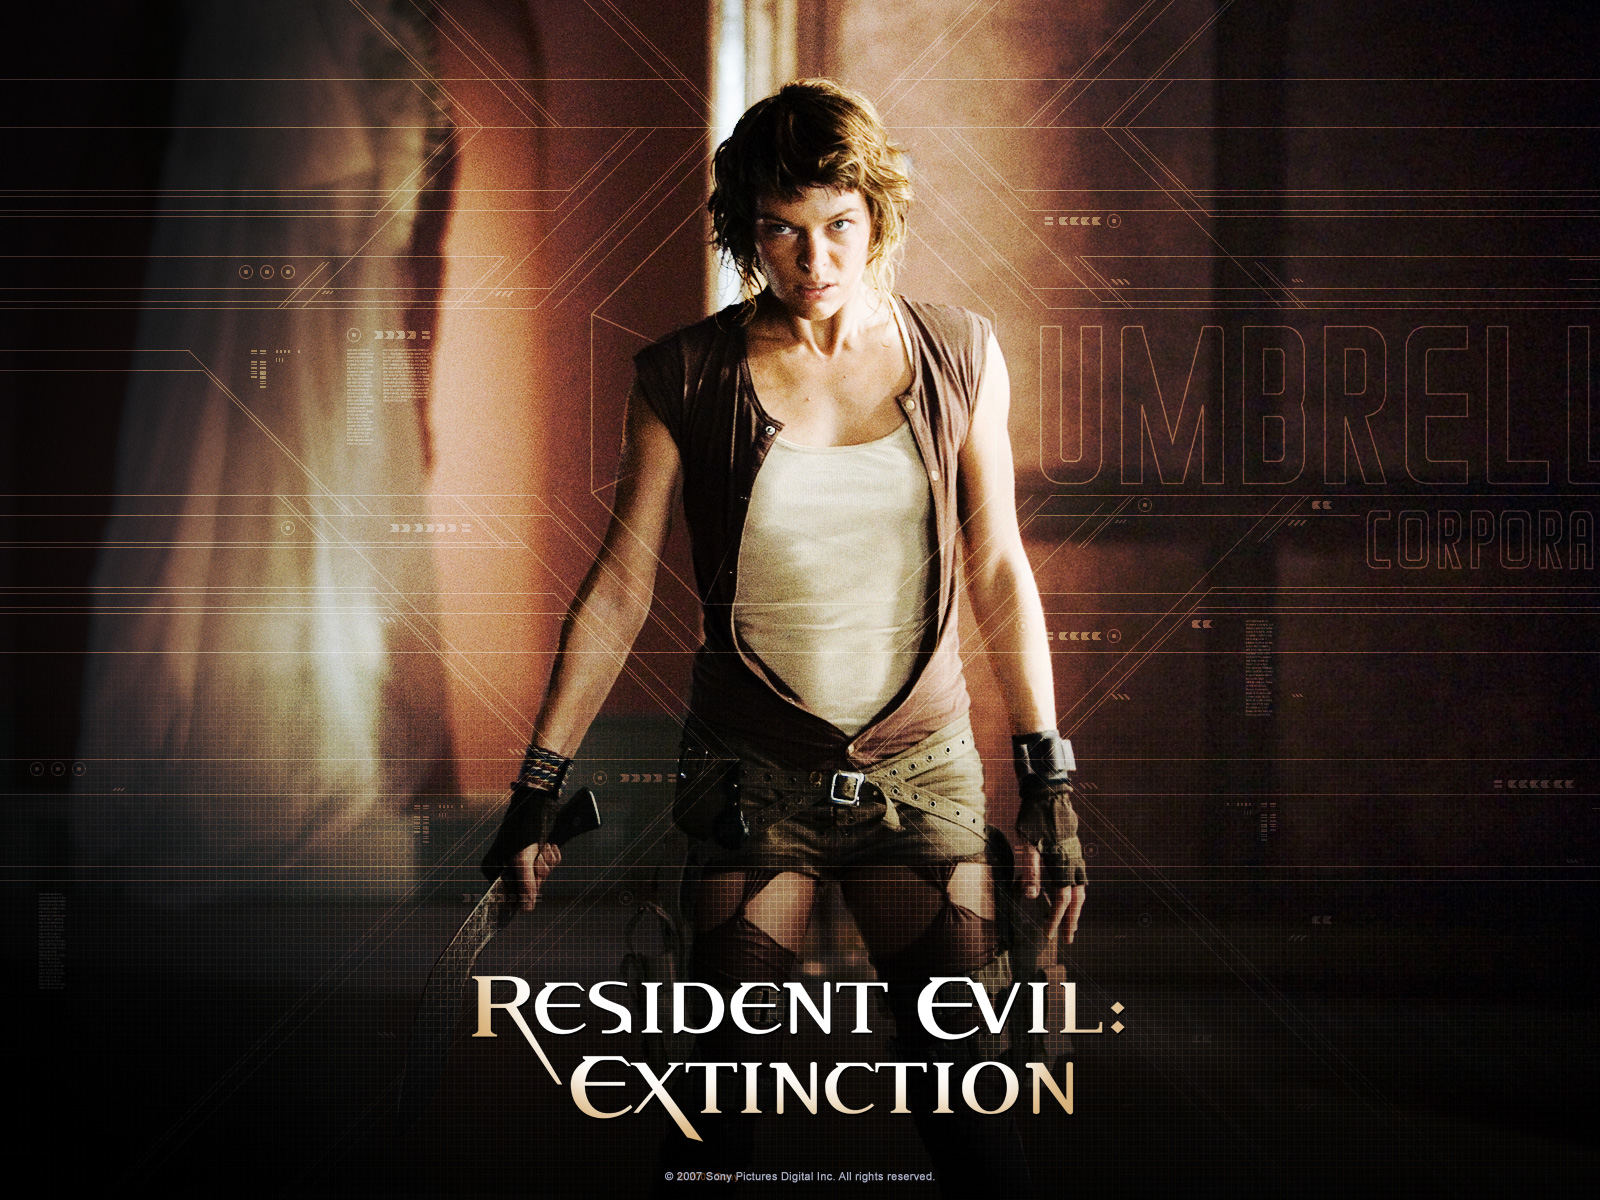 Amazoncom: Resident Evil: Extinction: Milla Jovovich